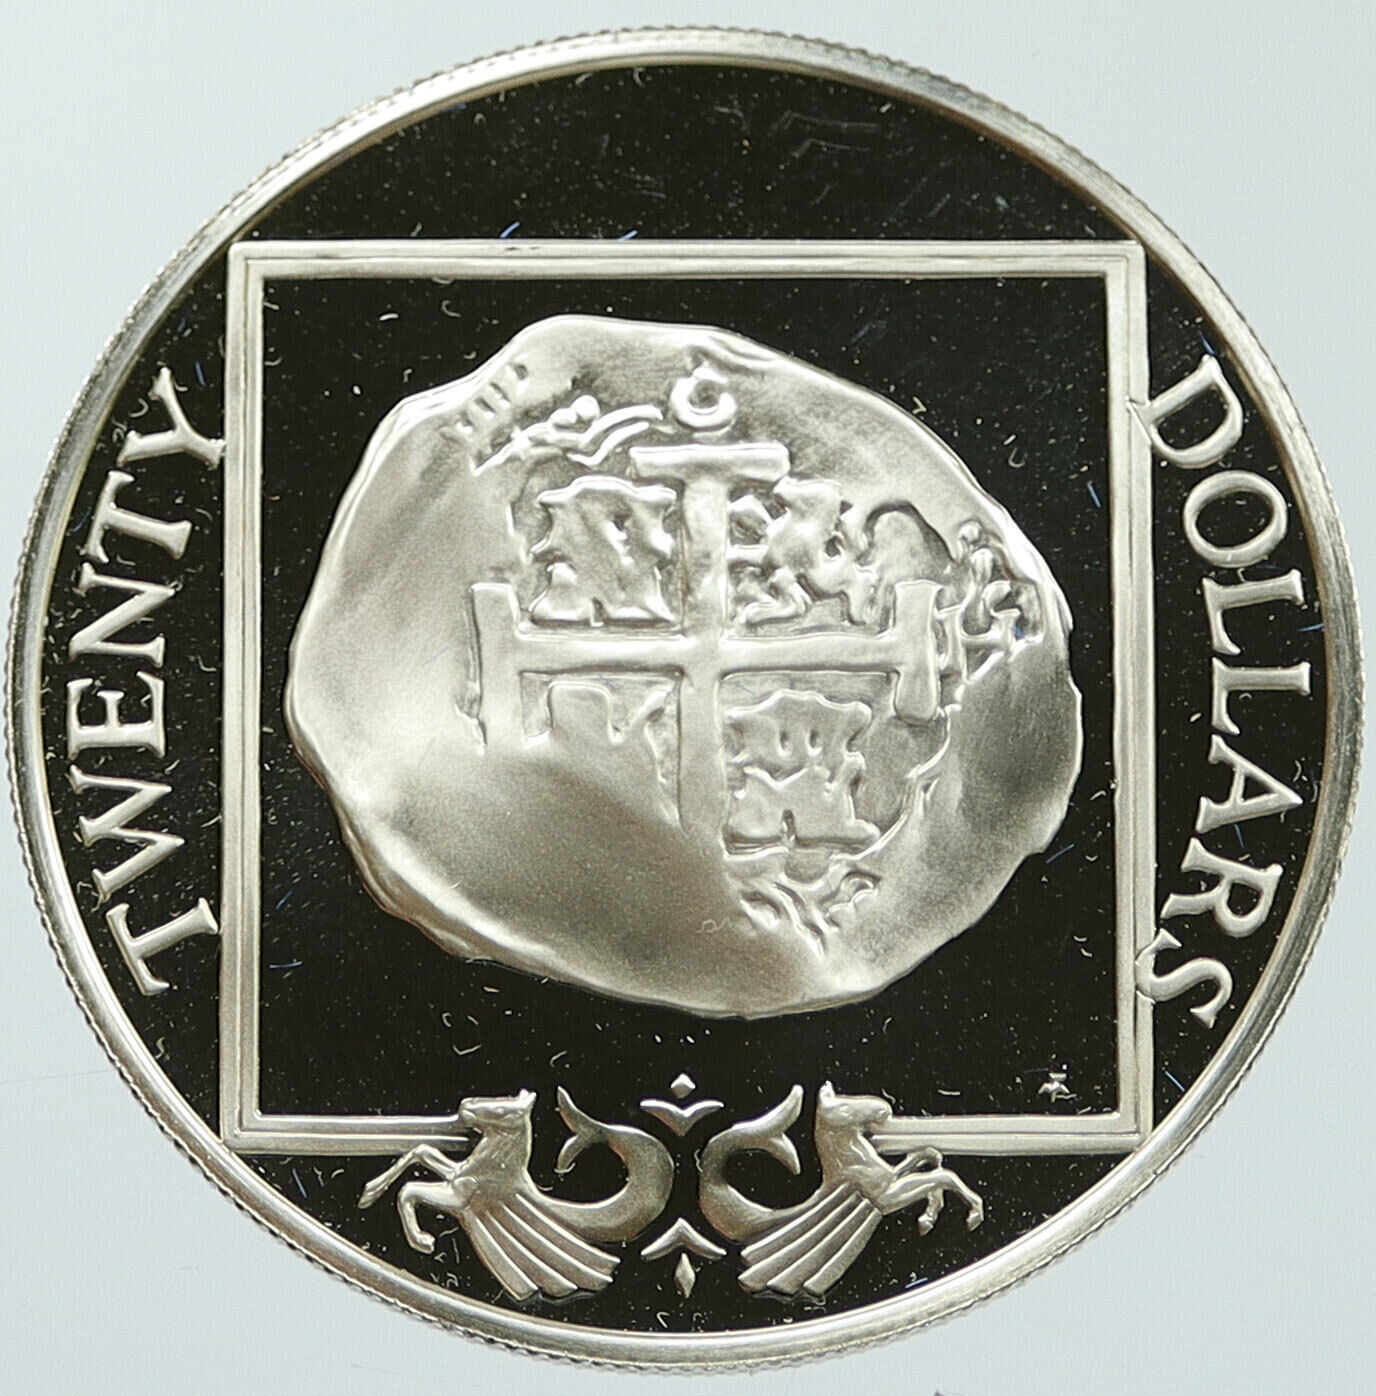 1985 British Virgin Islands TREASURE Ancient Coin Proof Silver $20 Coin i116856